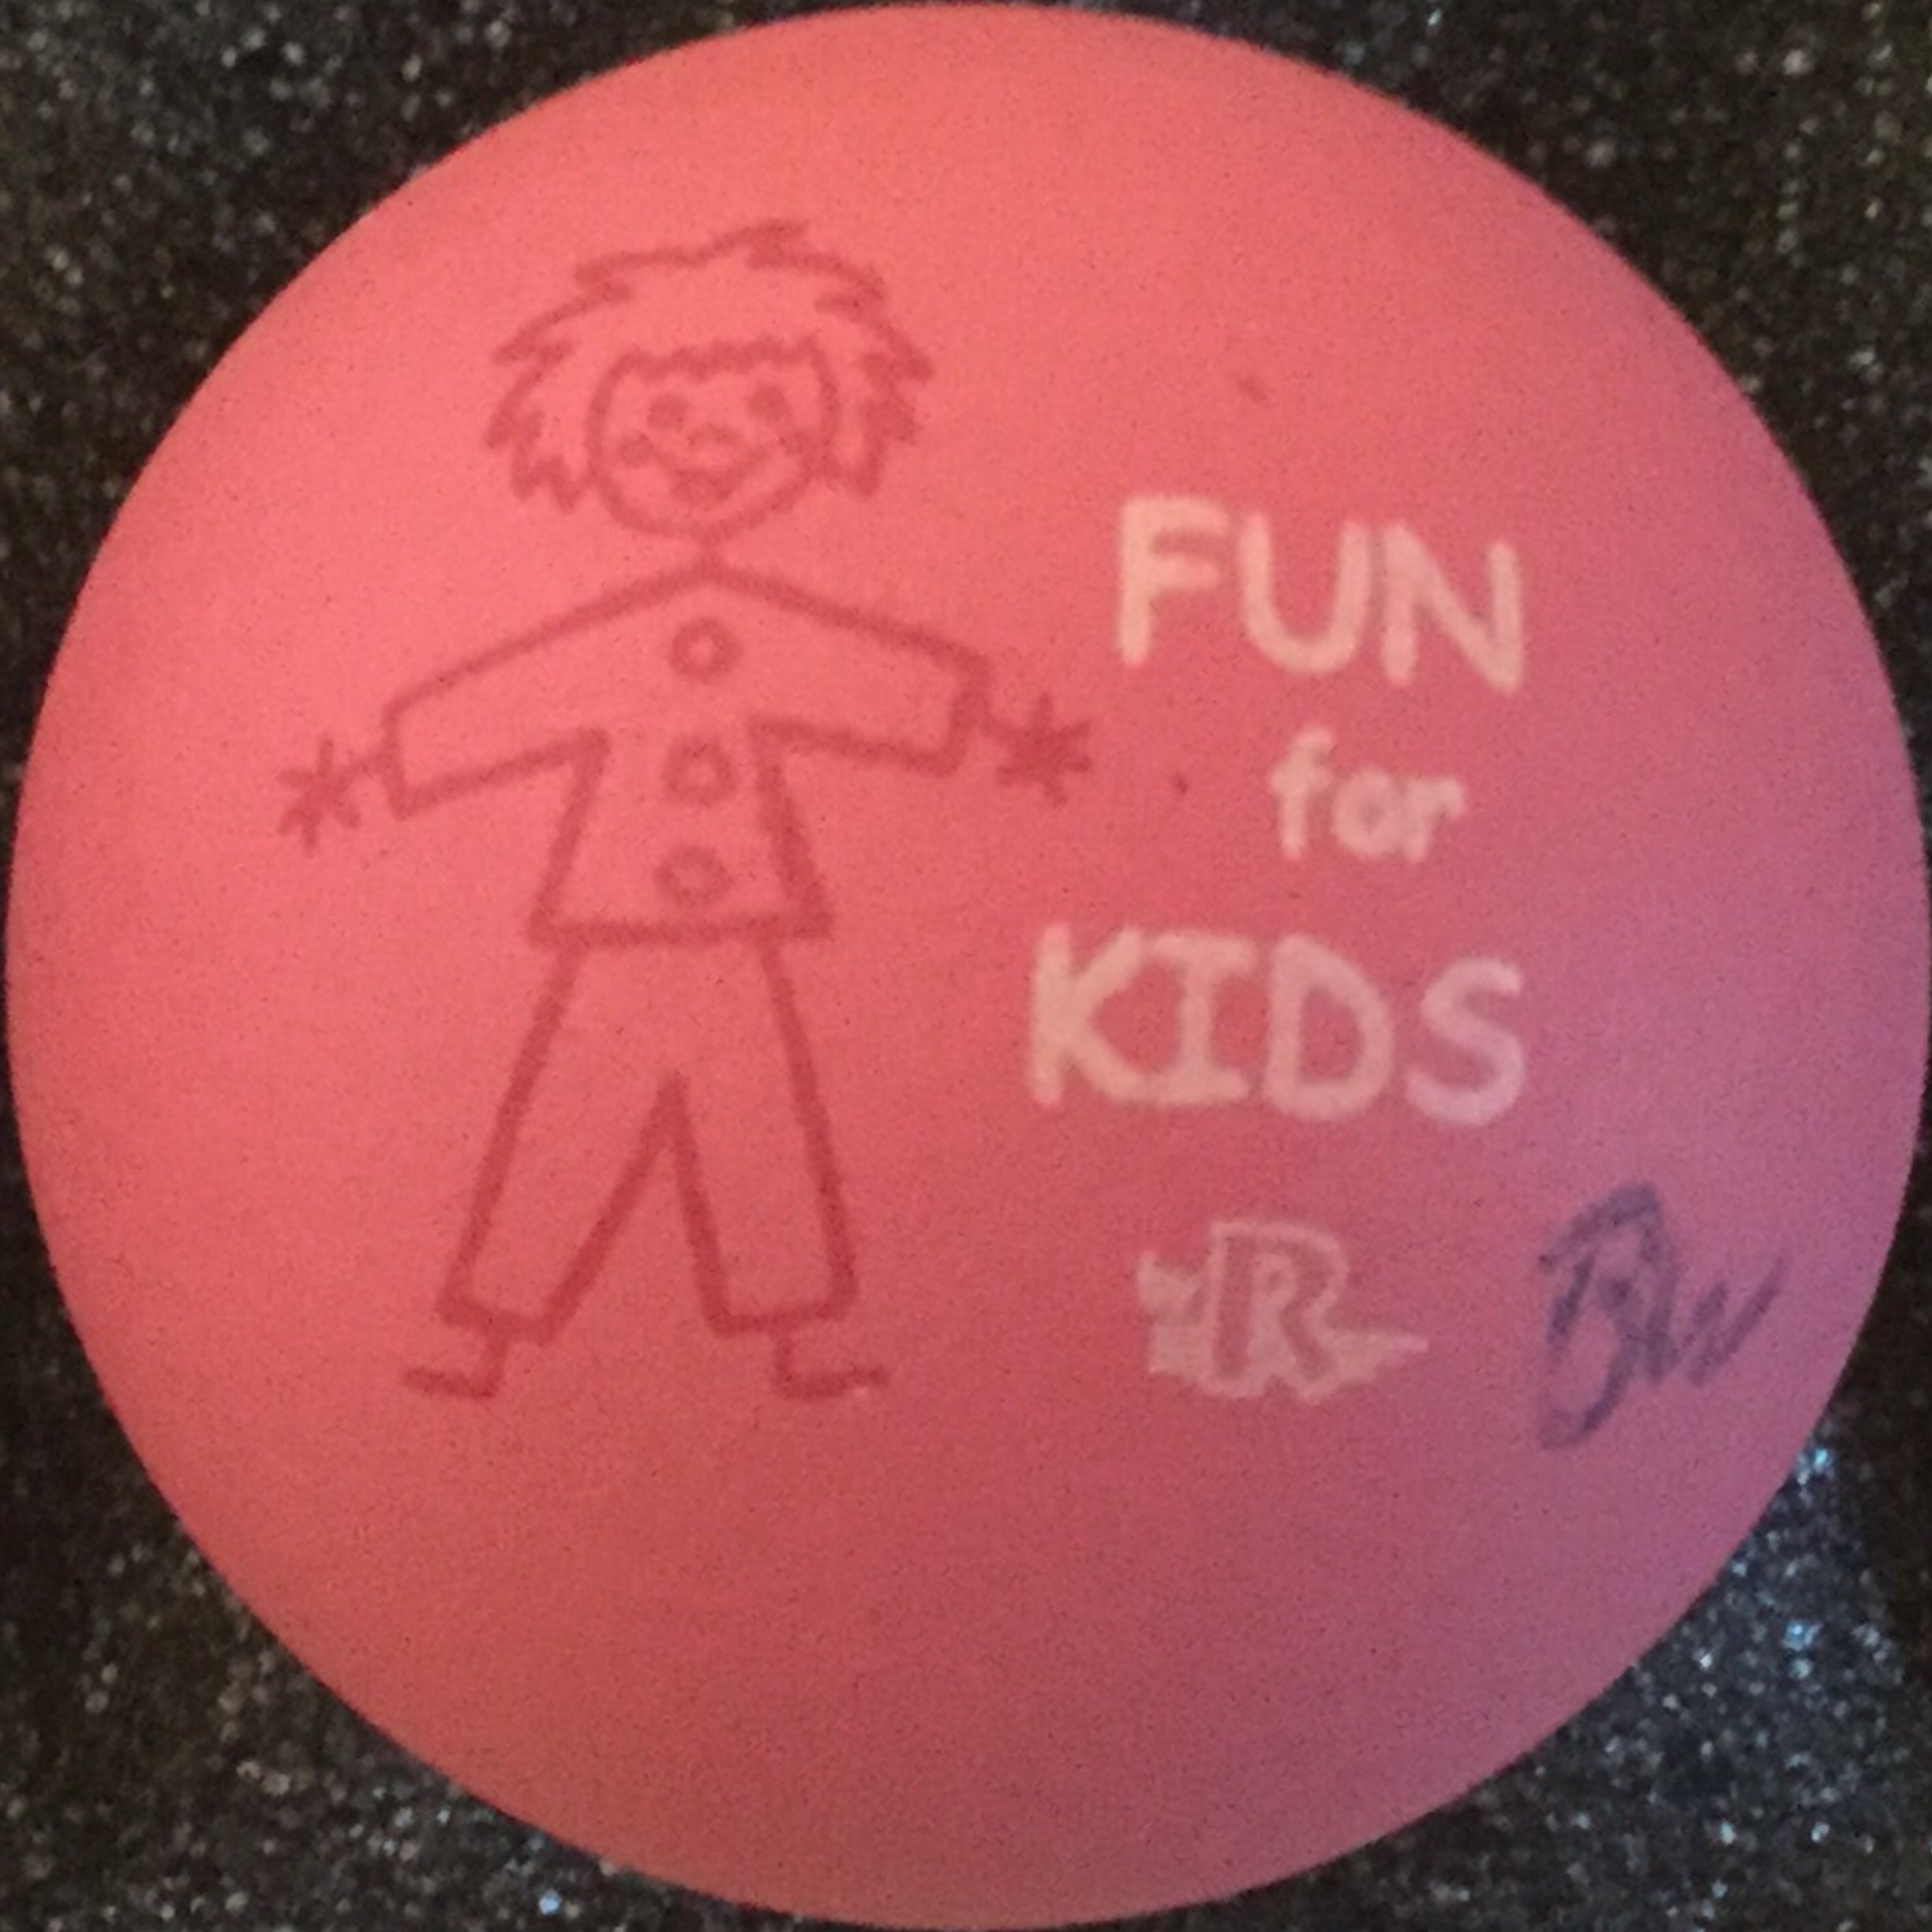 fun_for_kids_pink_r.jpg